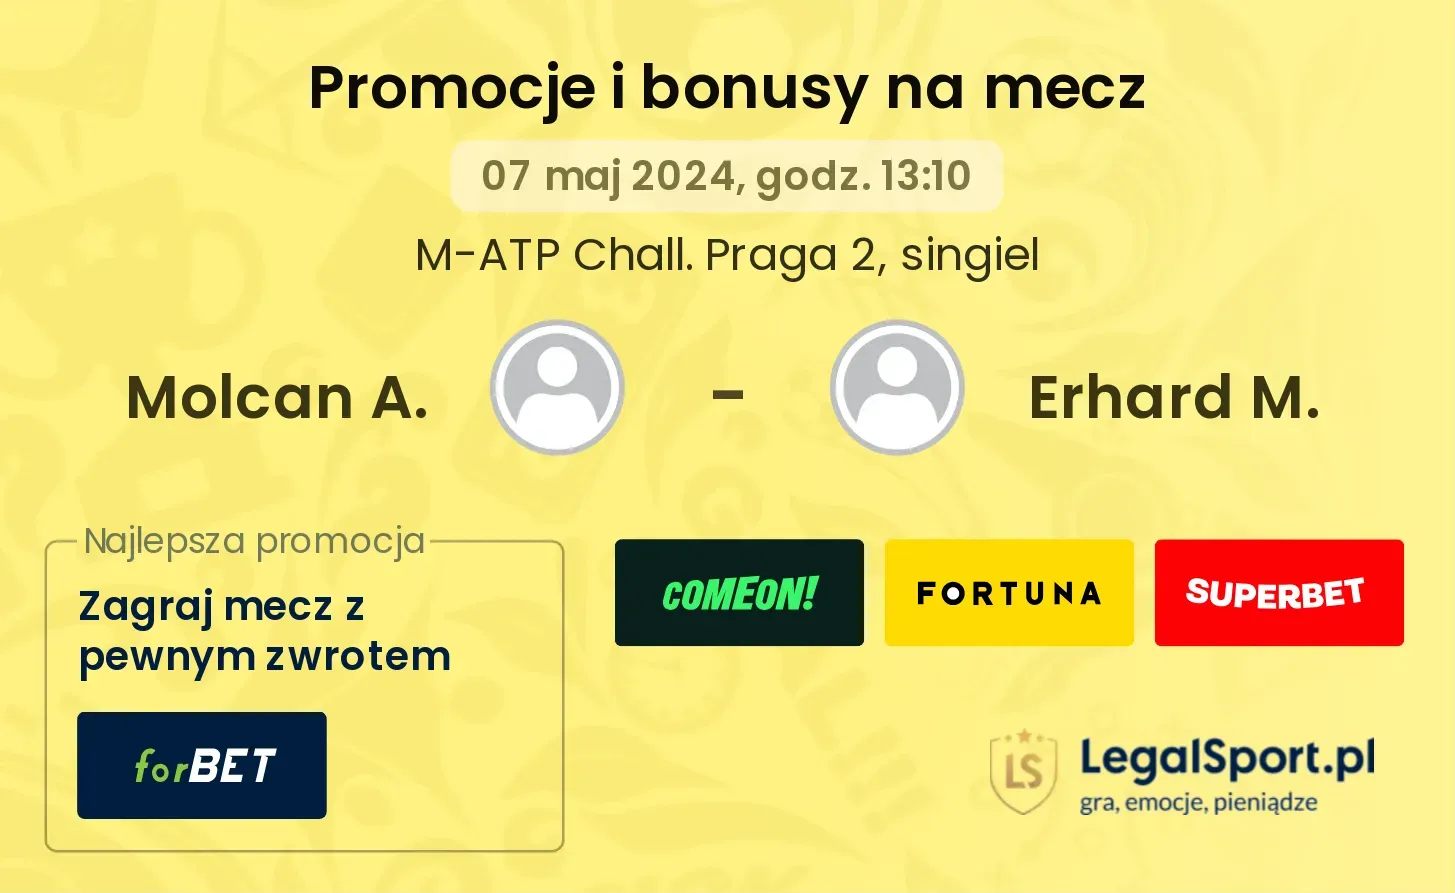 Molcan A. - Erhard M. promocje bonusy na mecz